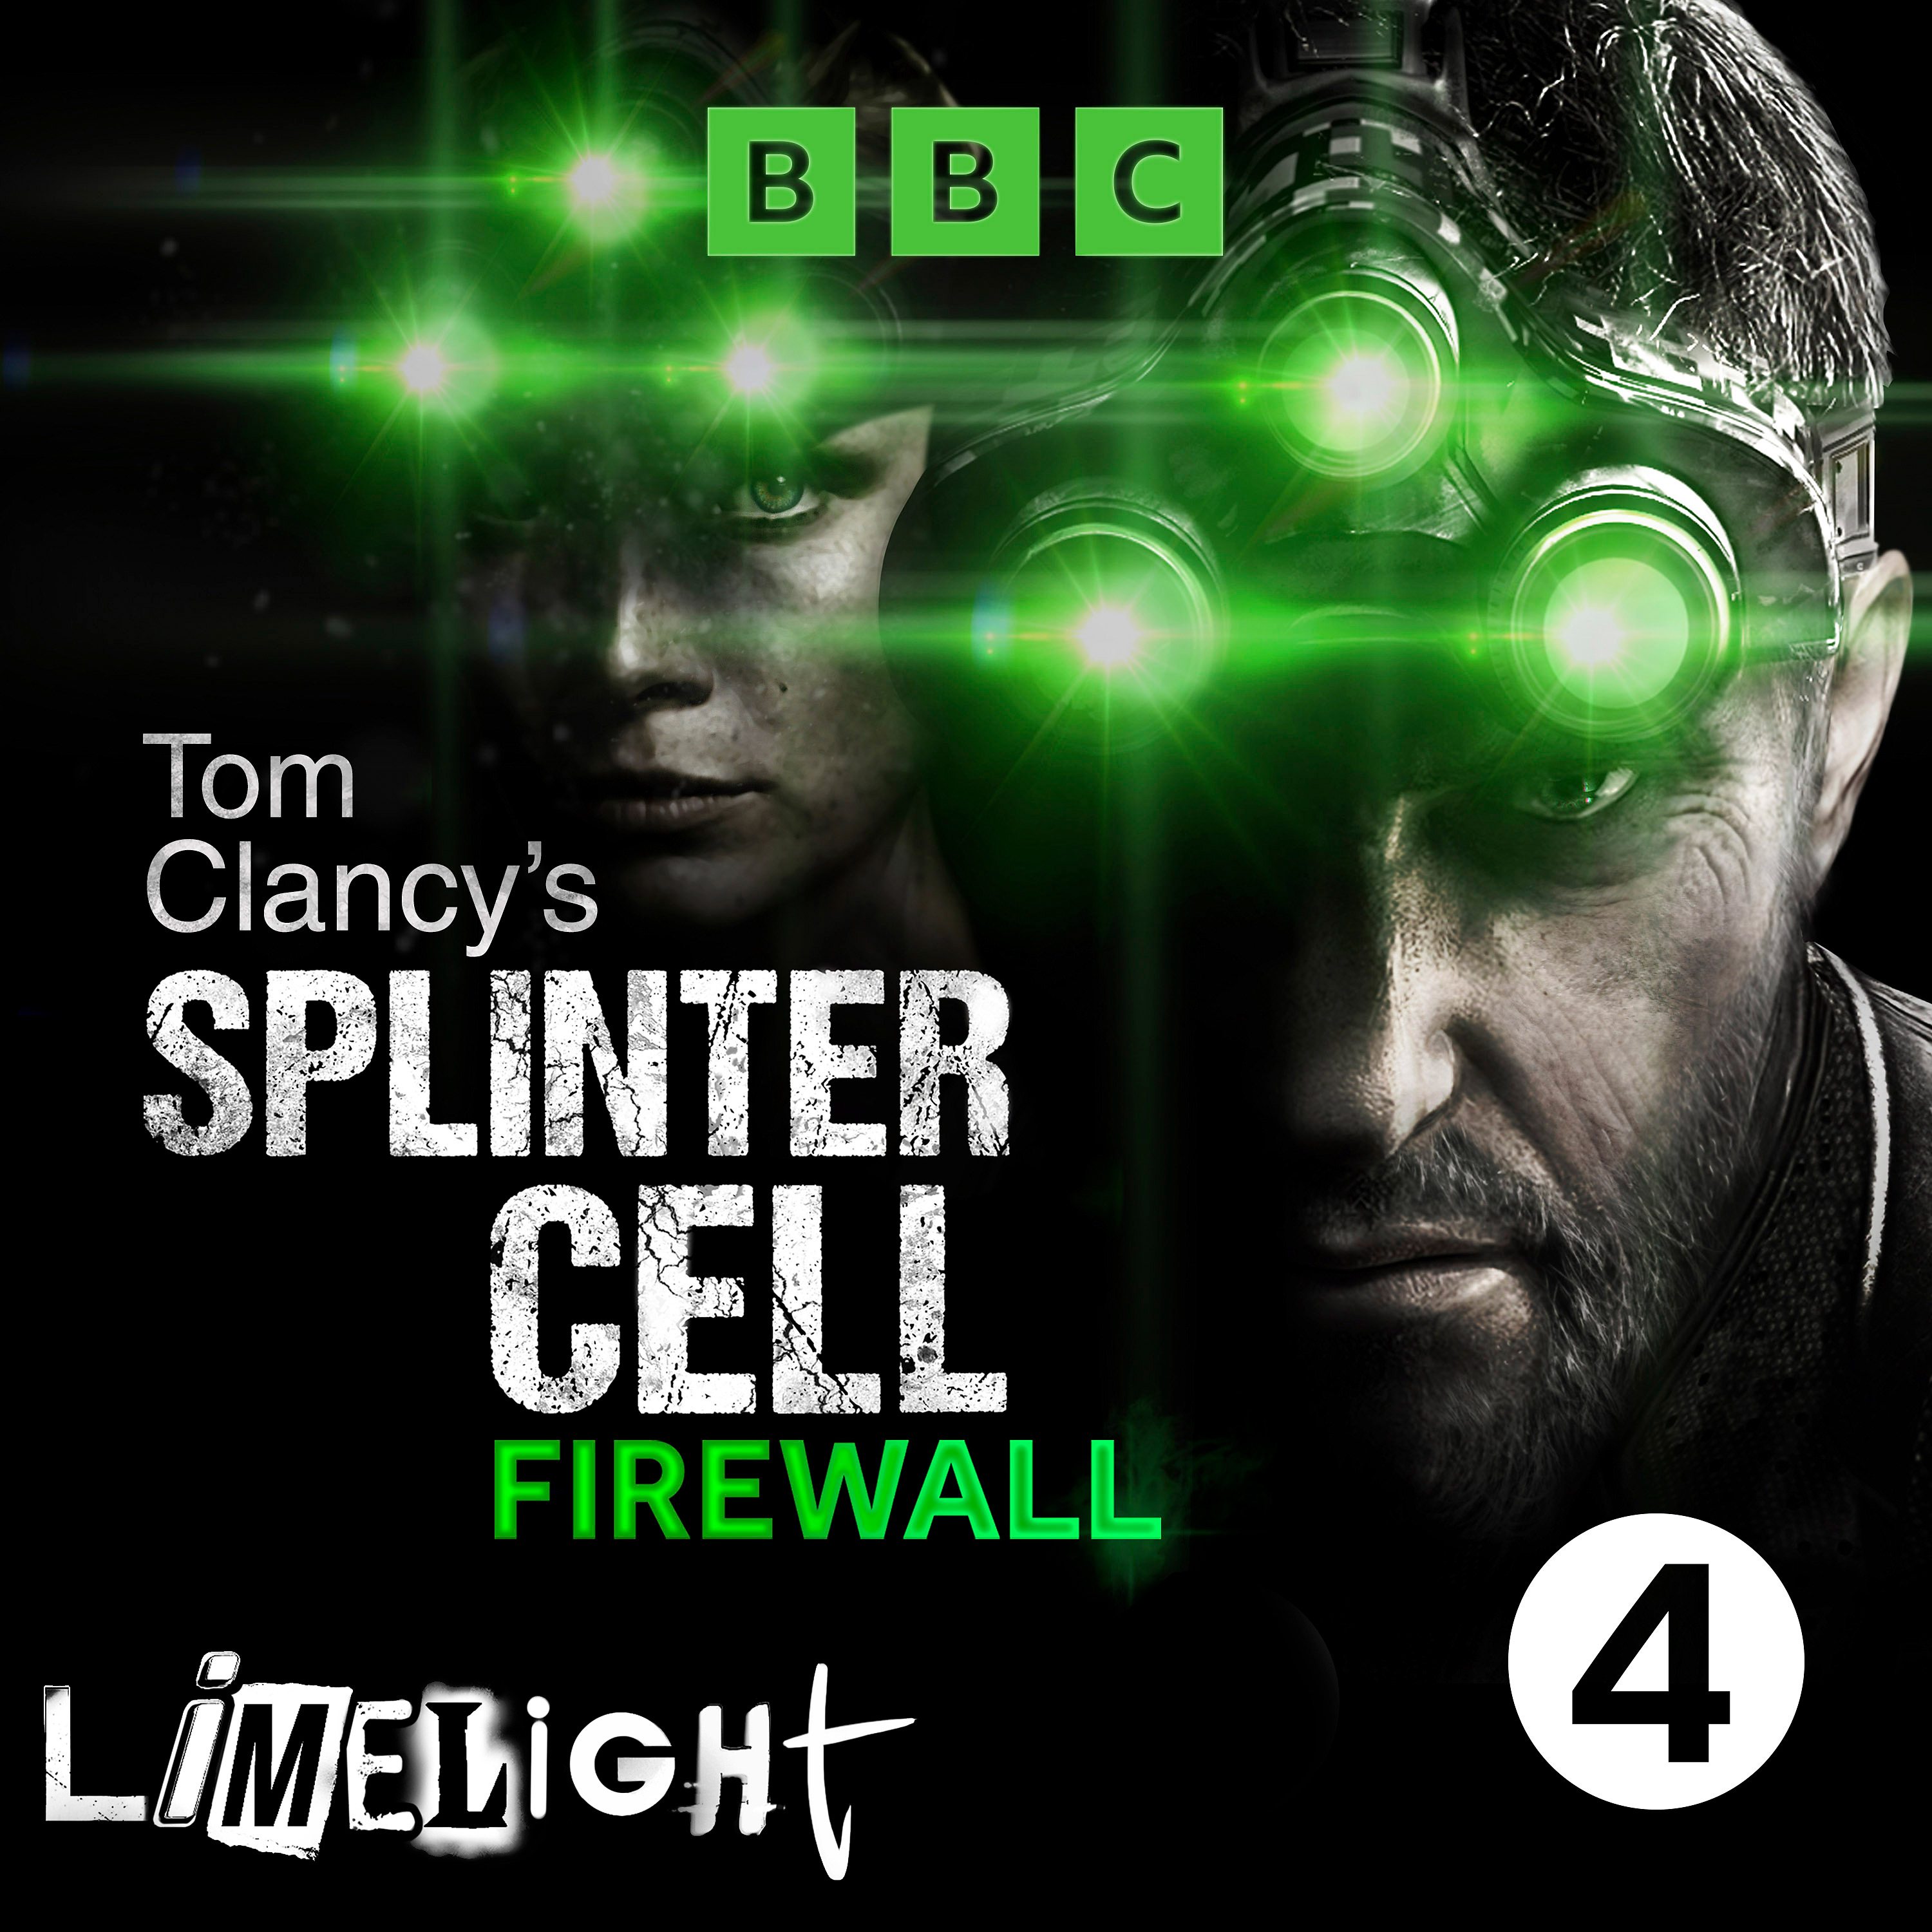 Tom Clancy’s Splinter Cell: Firewall, Episode 8